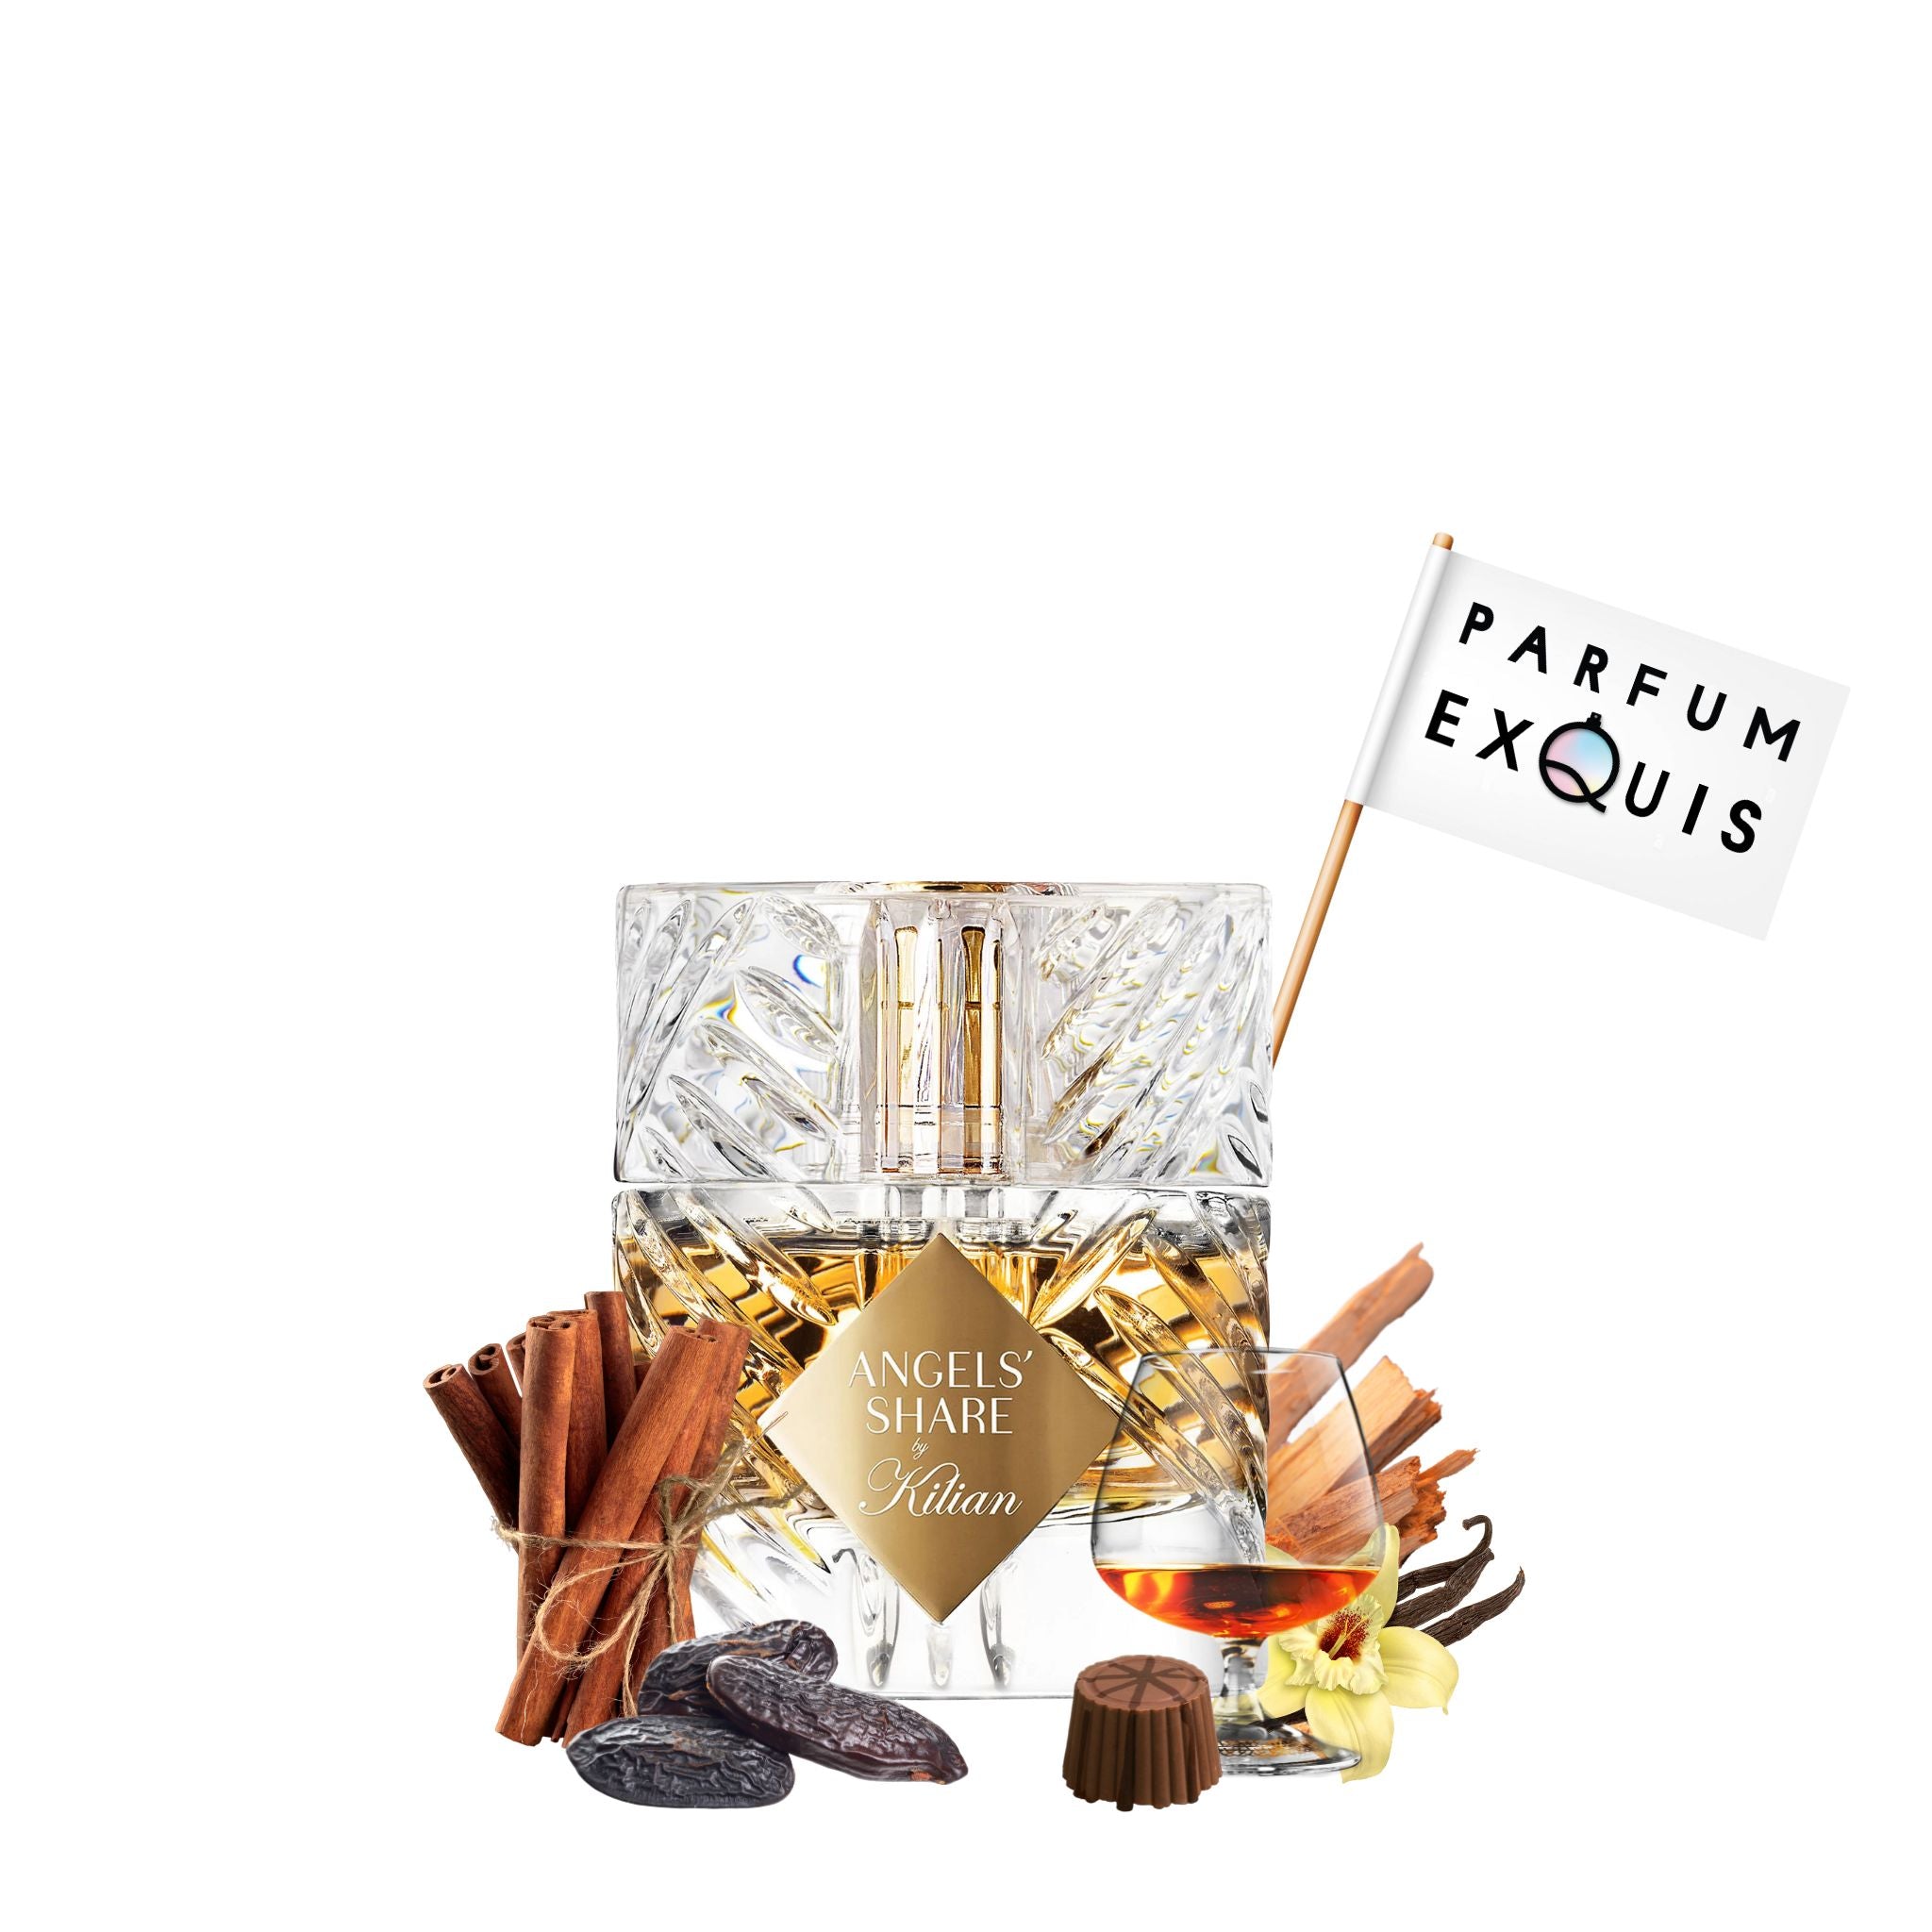 Angels Share | Kilian | parfumexquis